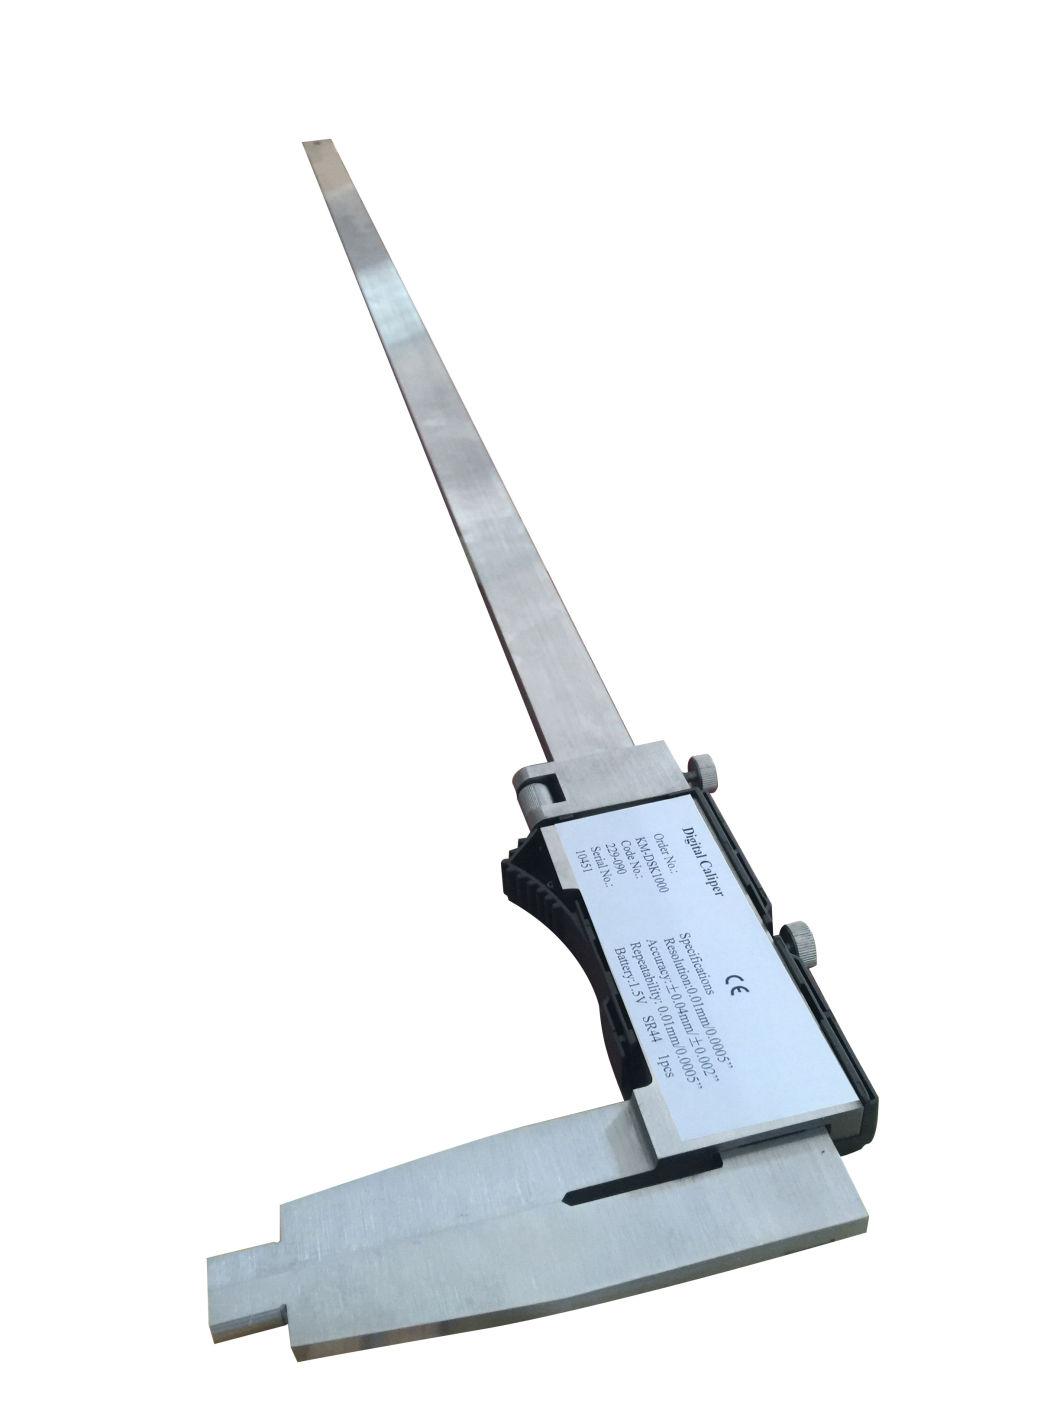 0-1000mm/0-40′′ Stainless Steel Large Range Electronic Digital Display Vernier Caliper